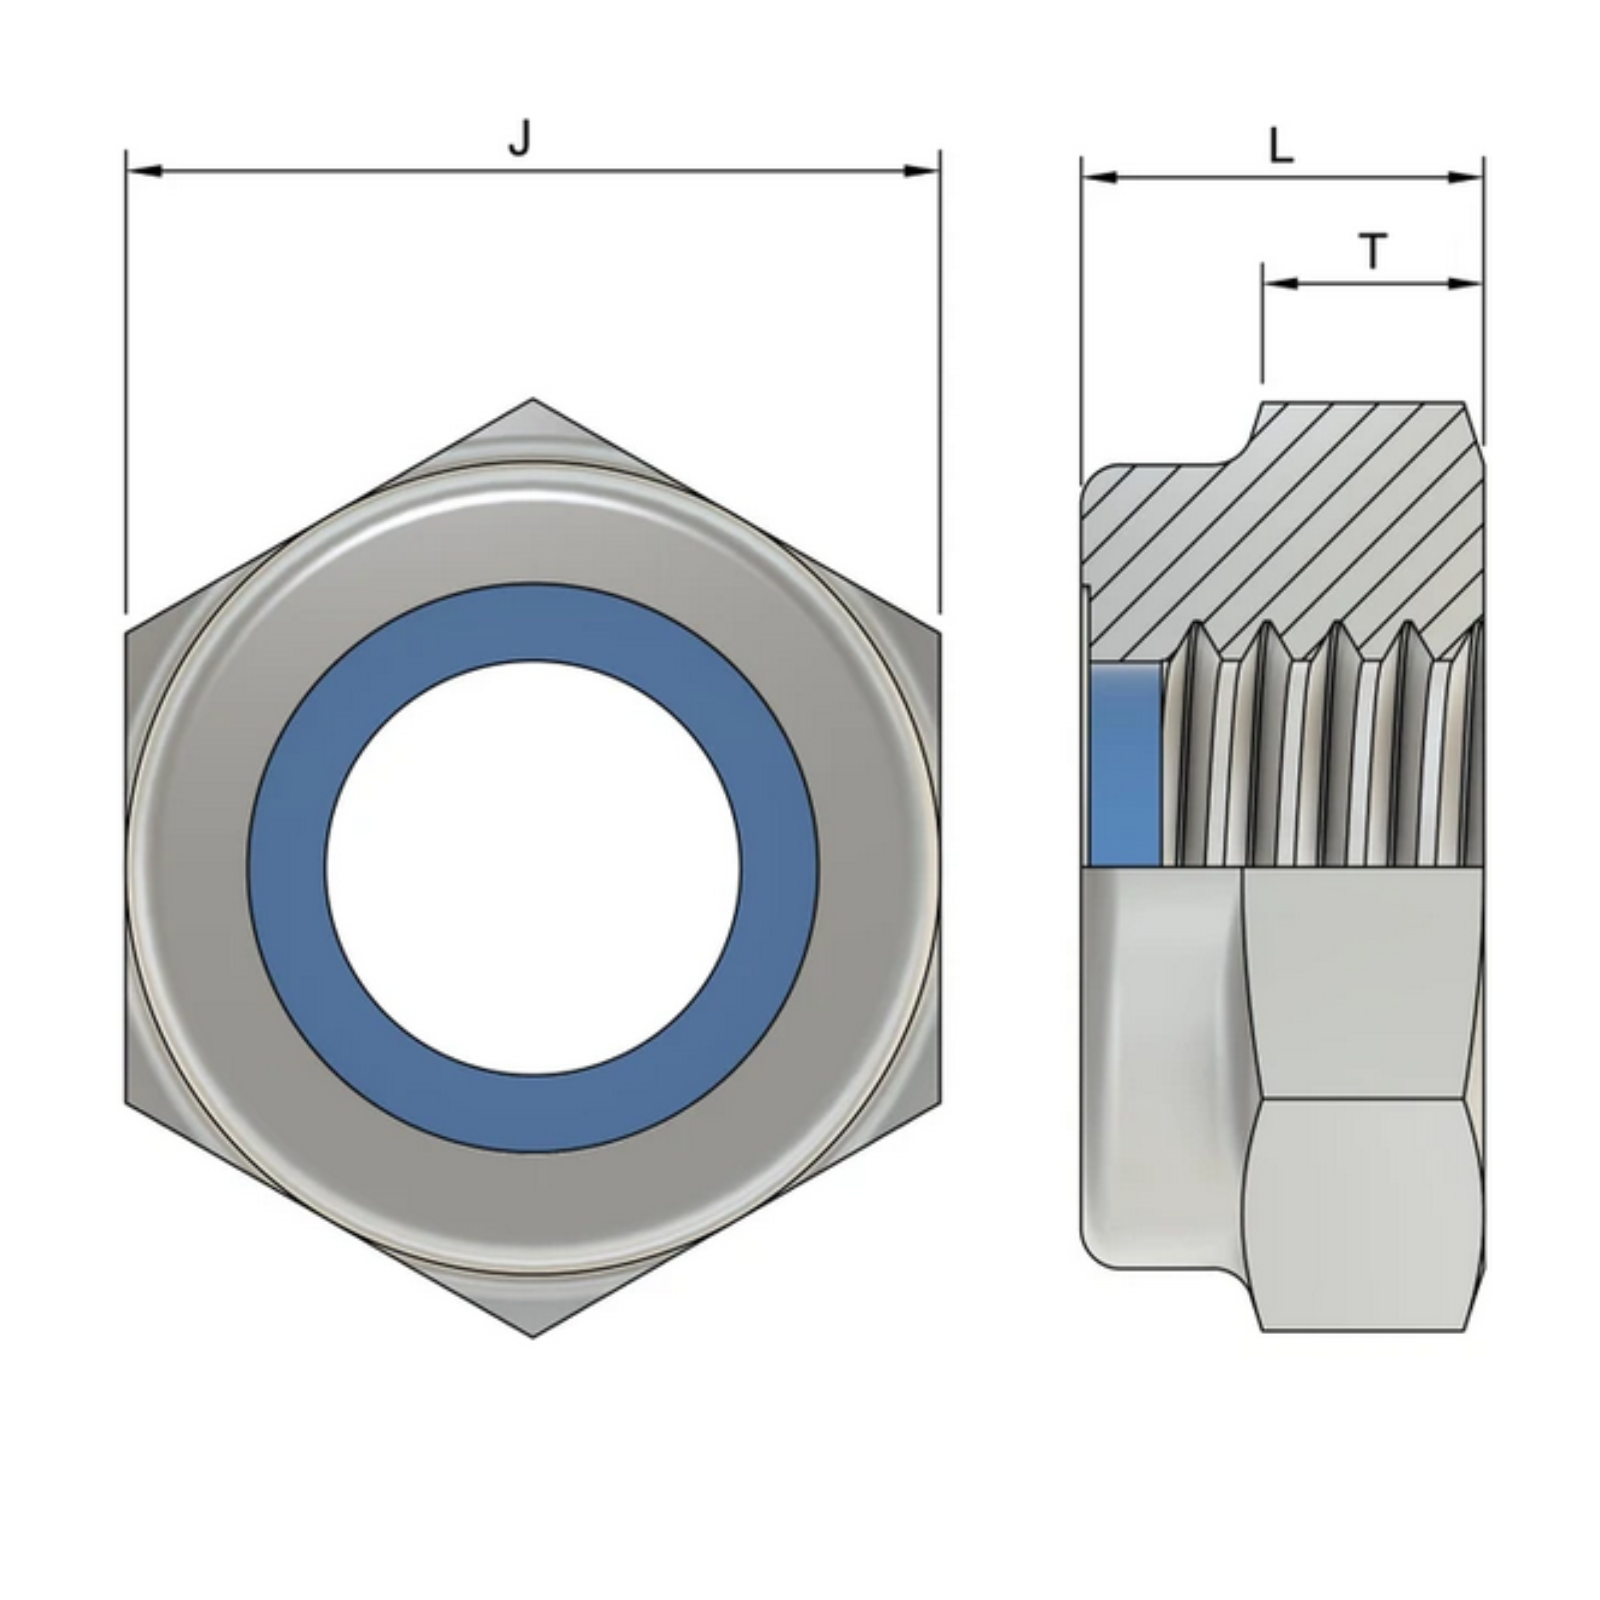 M8 Hexagon Nylon Locking Nuts (DIN 985) - Zinc Plated Steel